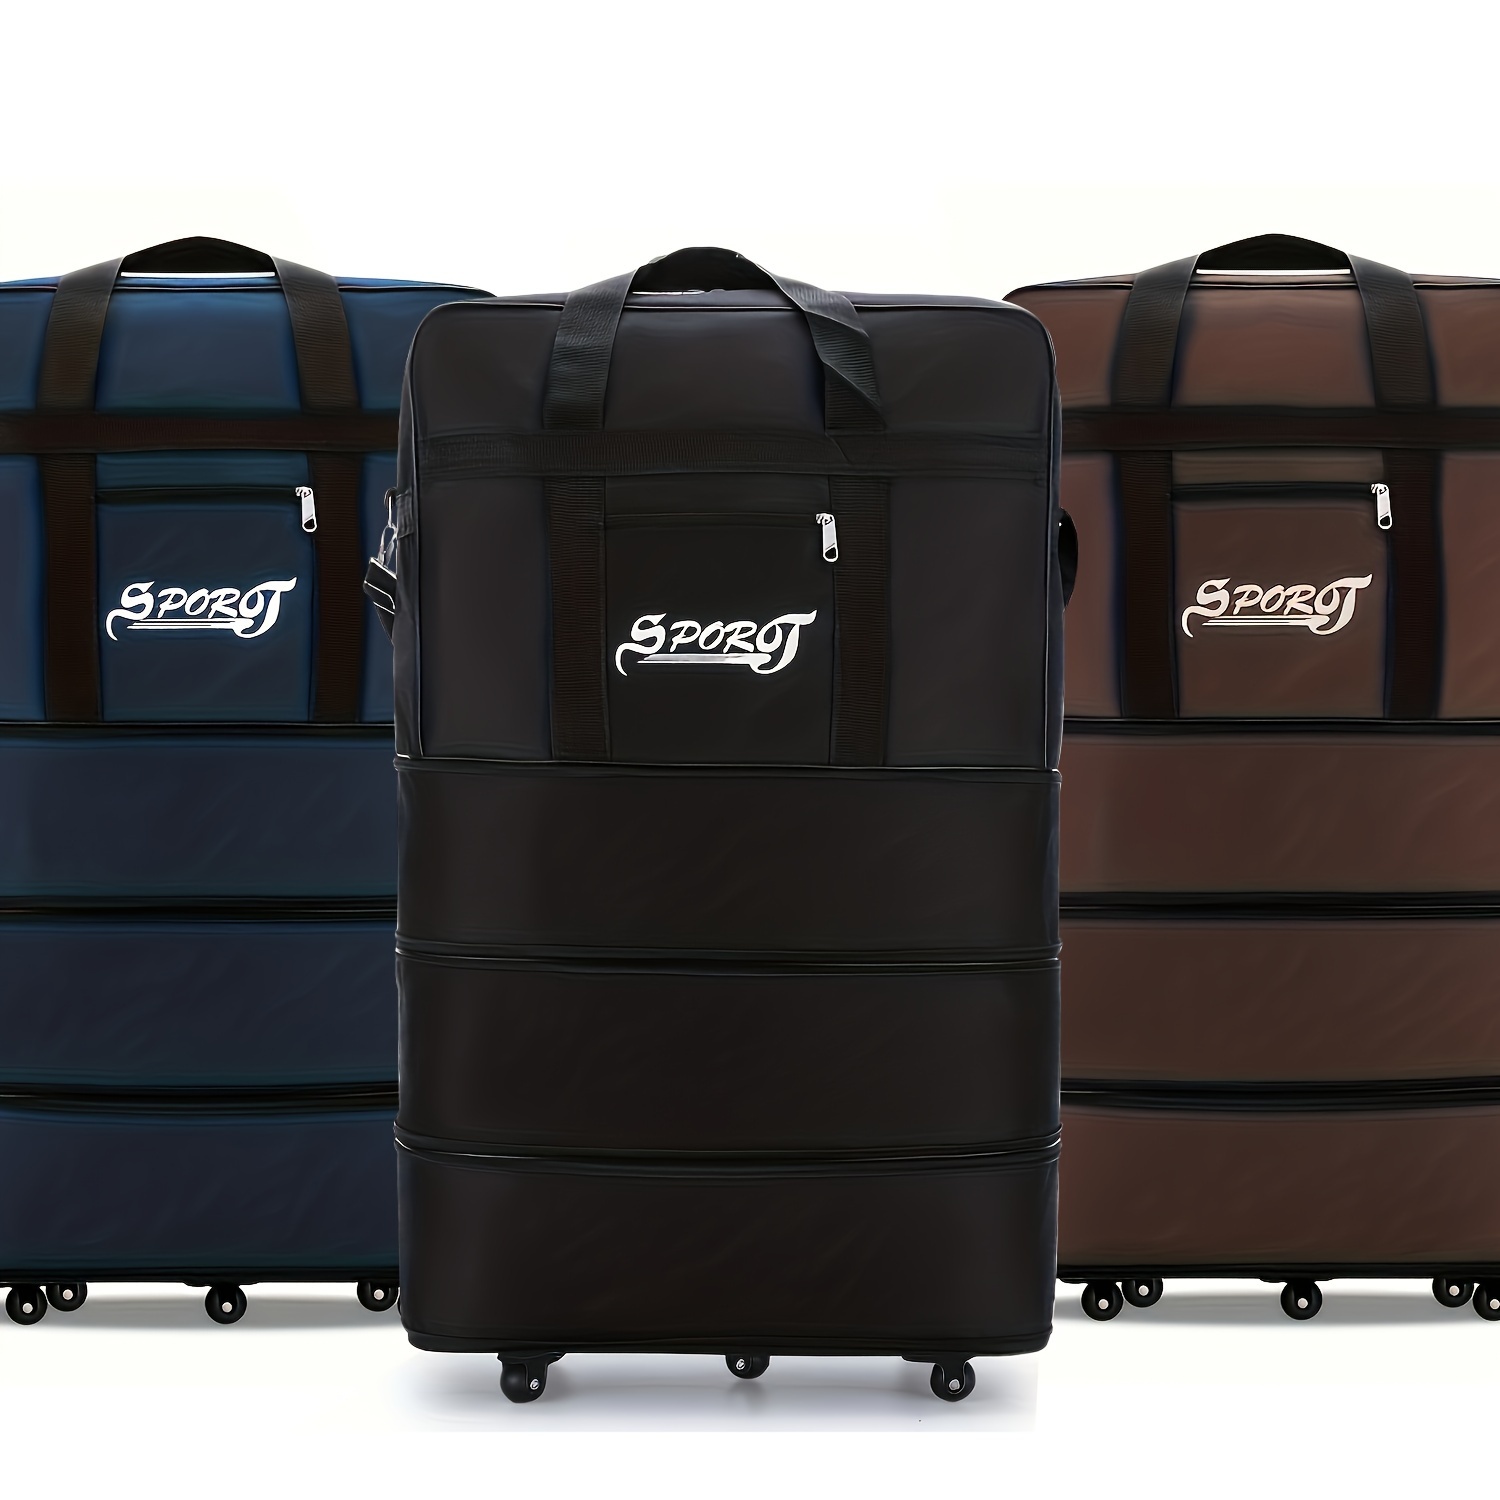 Waterproof Large Capacity Folding Travel Bag Lightweight - High Capacity! 